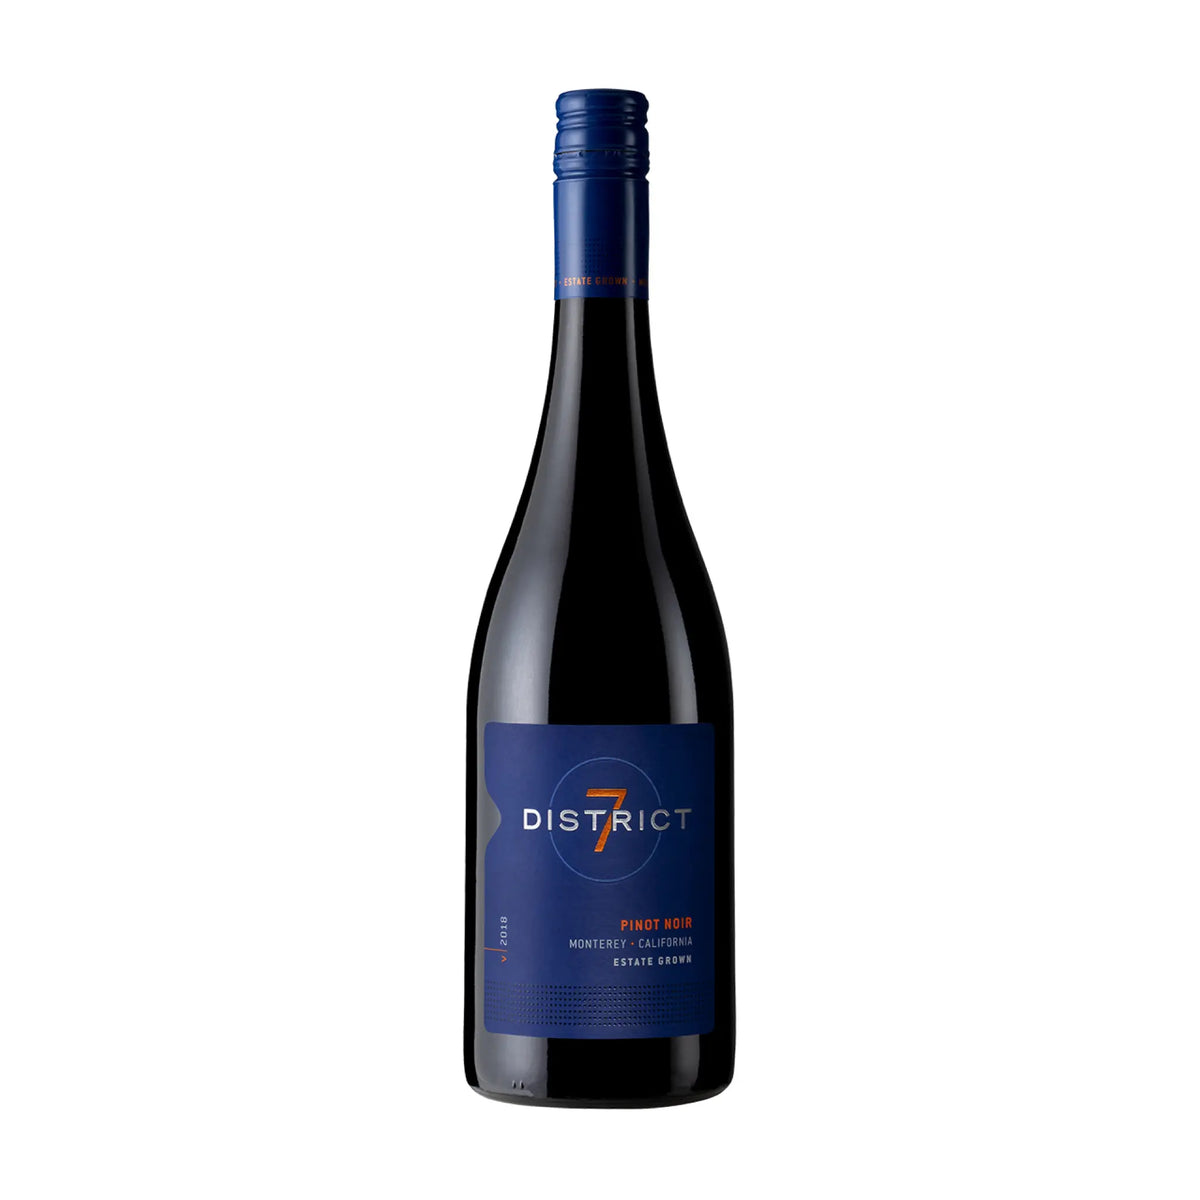 Scheid Family Wines-Rotwein-Pinot Noir-USA-Kalifornien-2020 District 7 Pinot Noir-WINECOM